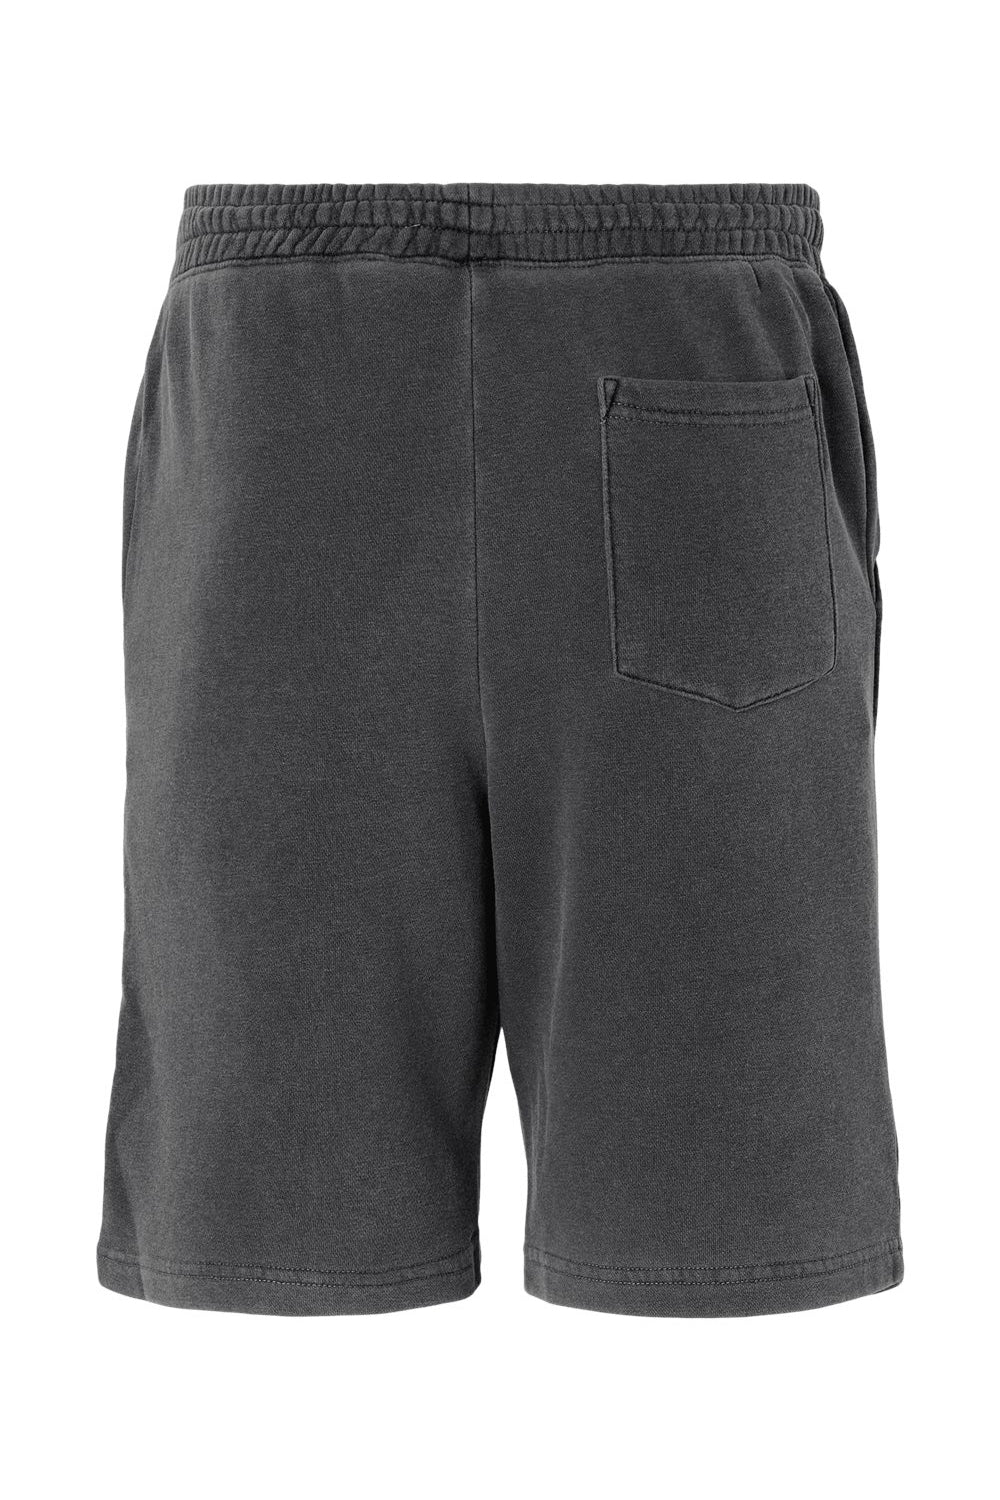 Independent Trading Co. PRM50STPD Mens Pigment Dyed Fleece Shorts w/ Pockets Black Flat Back